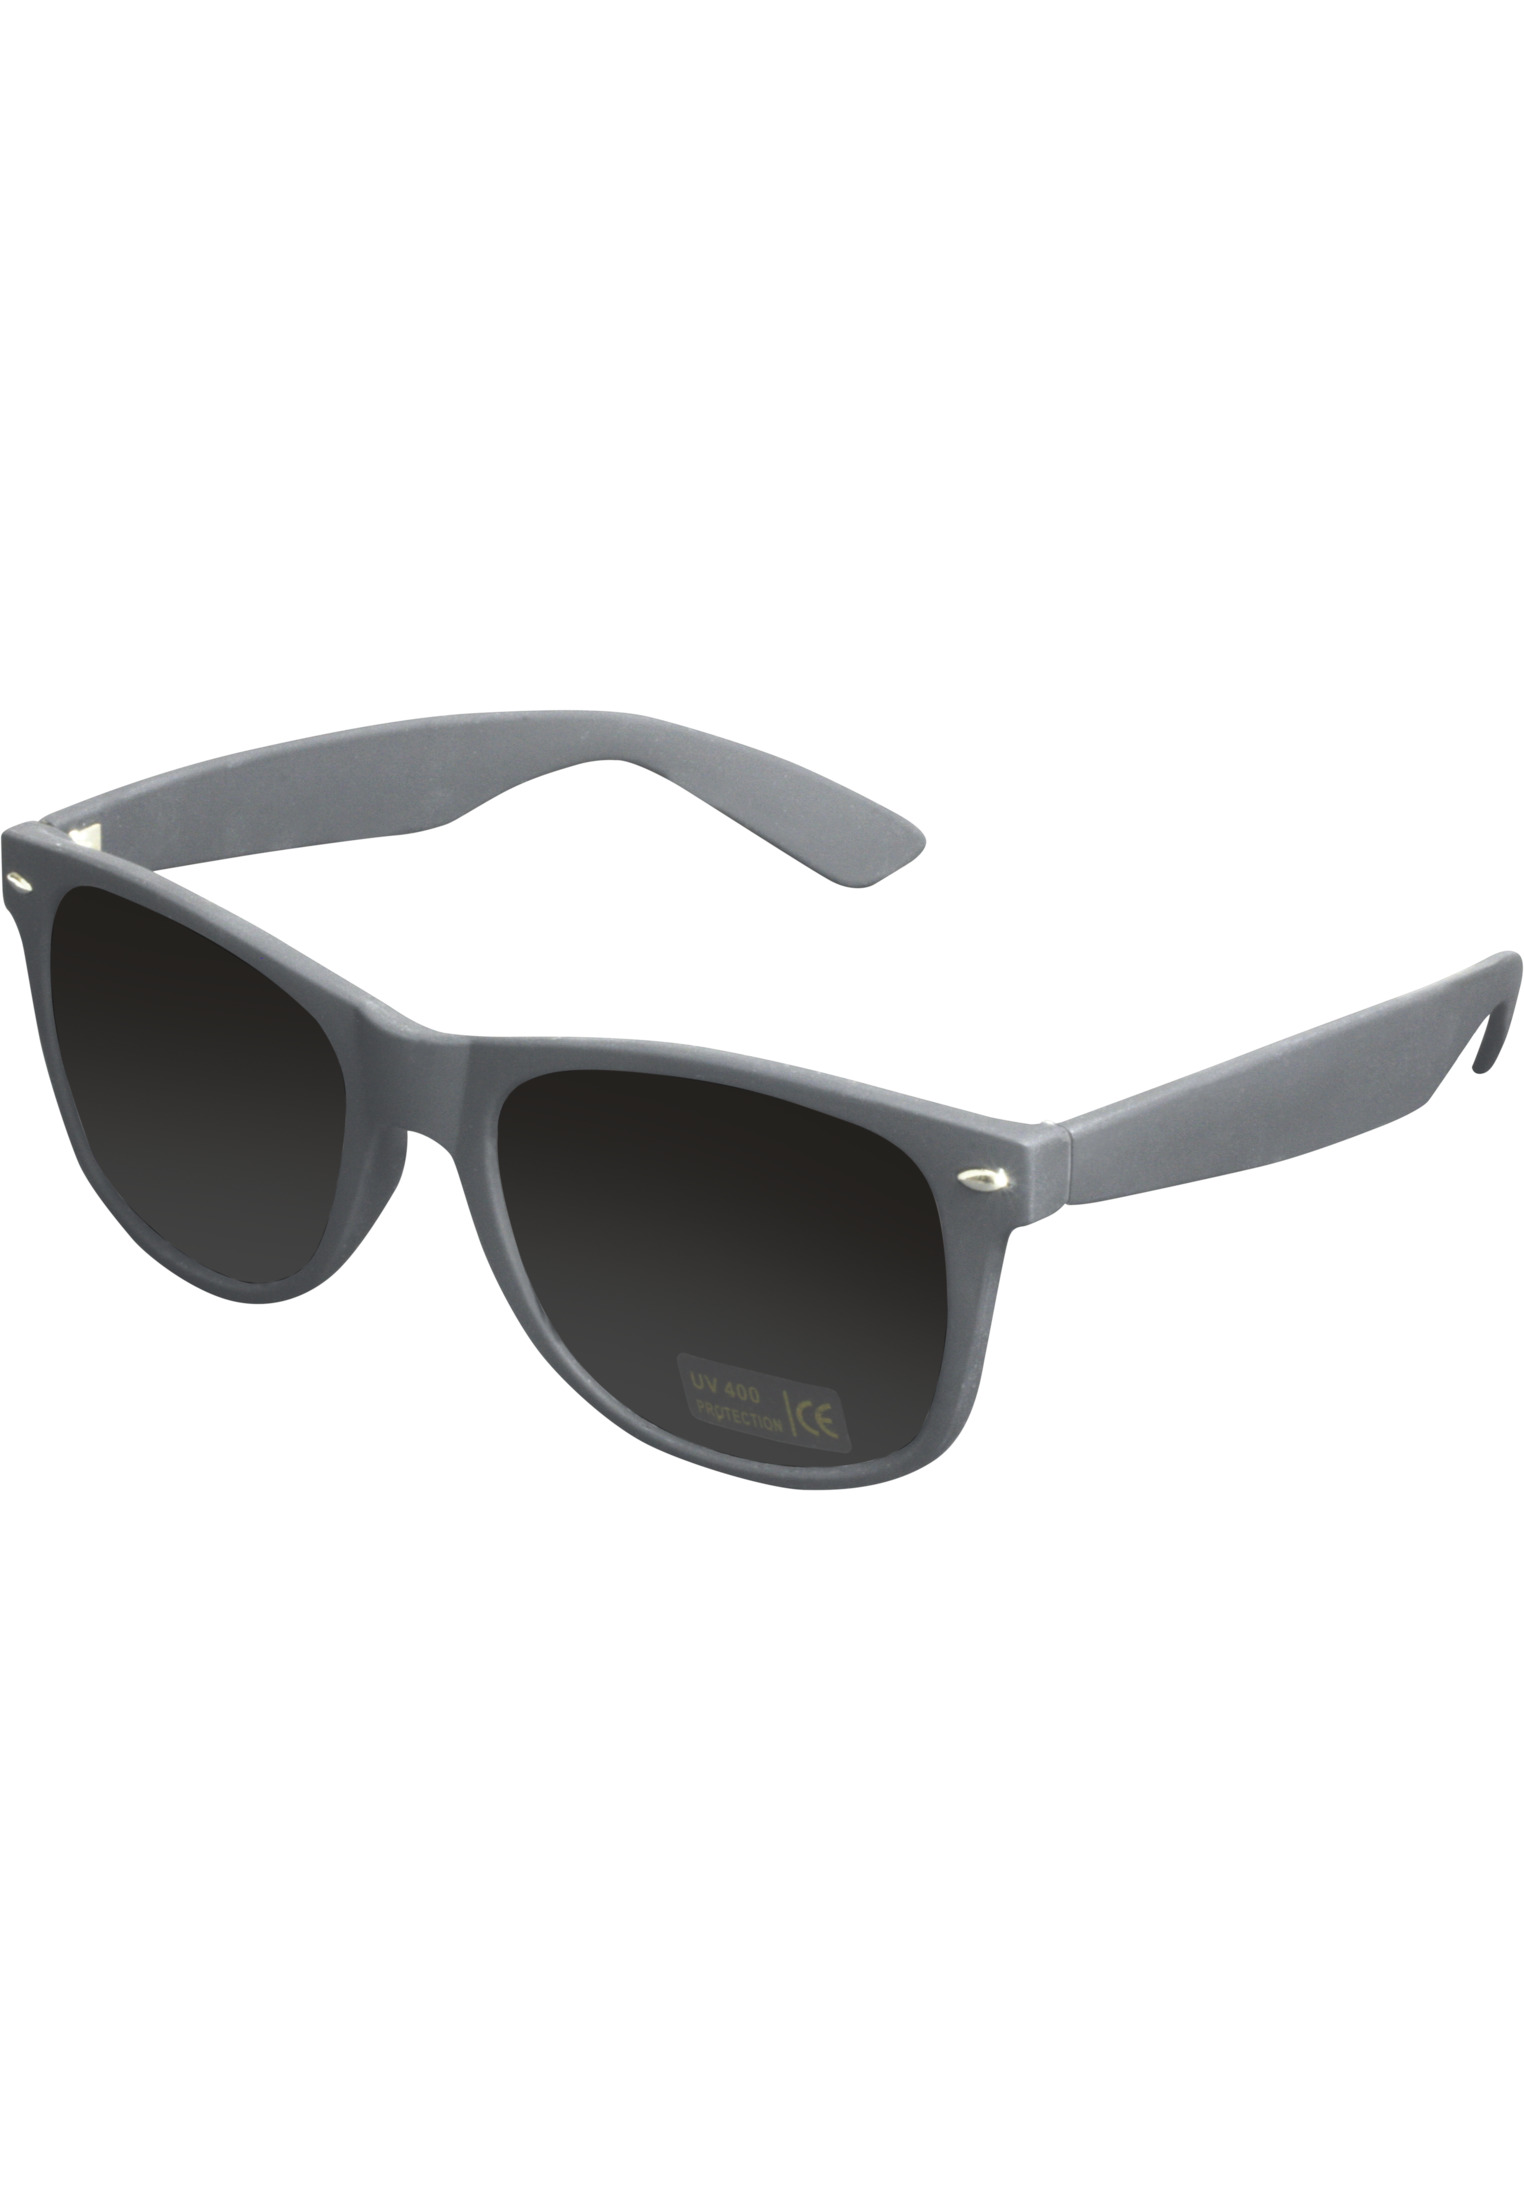 Likoma sunglasses grey